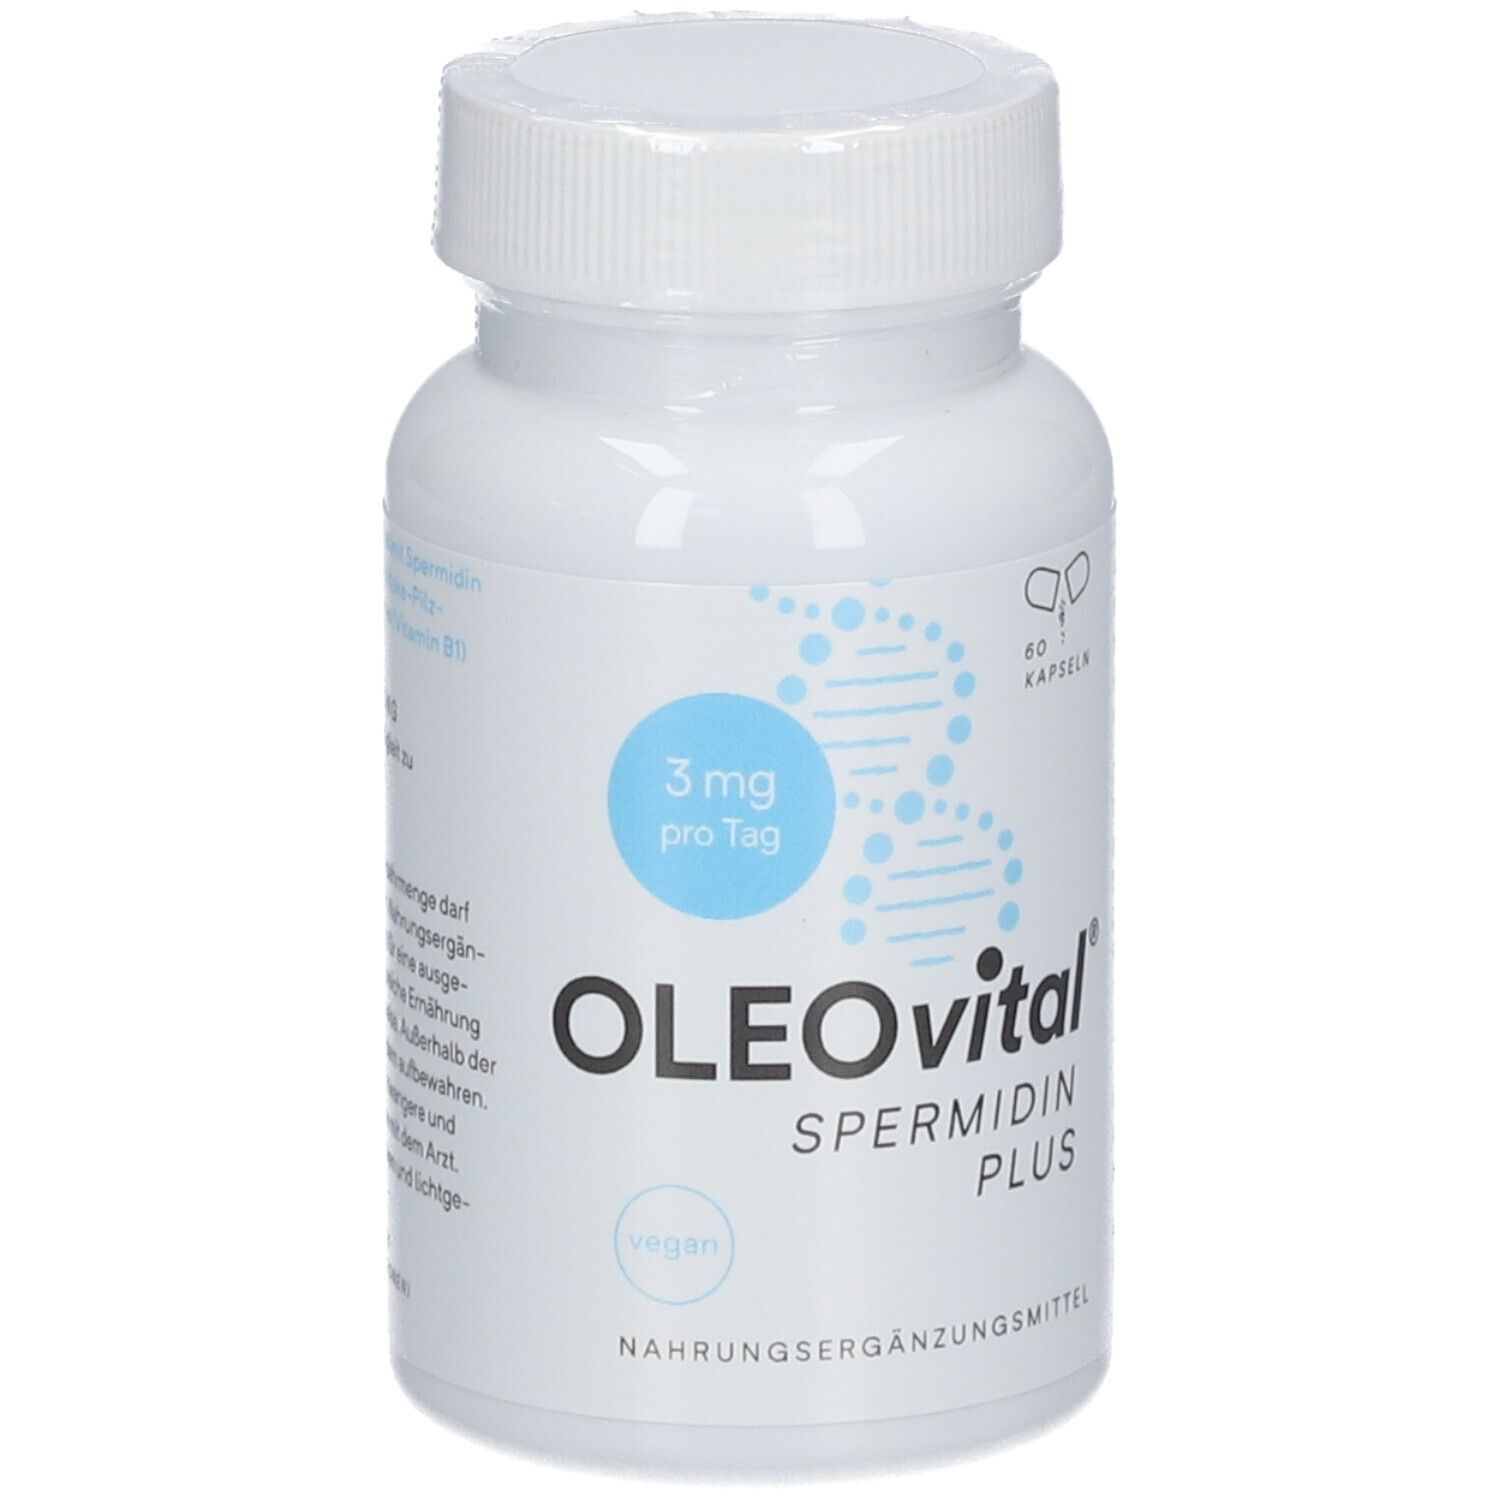 OLEOvital® Spermidin Plus